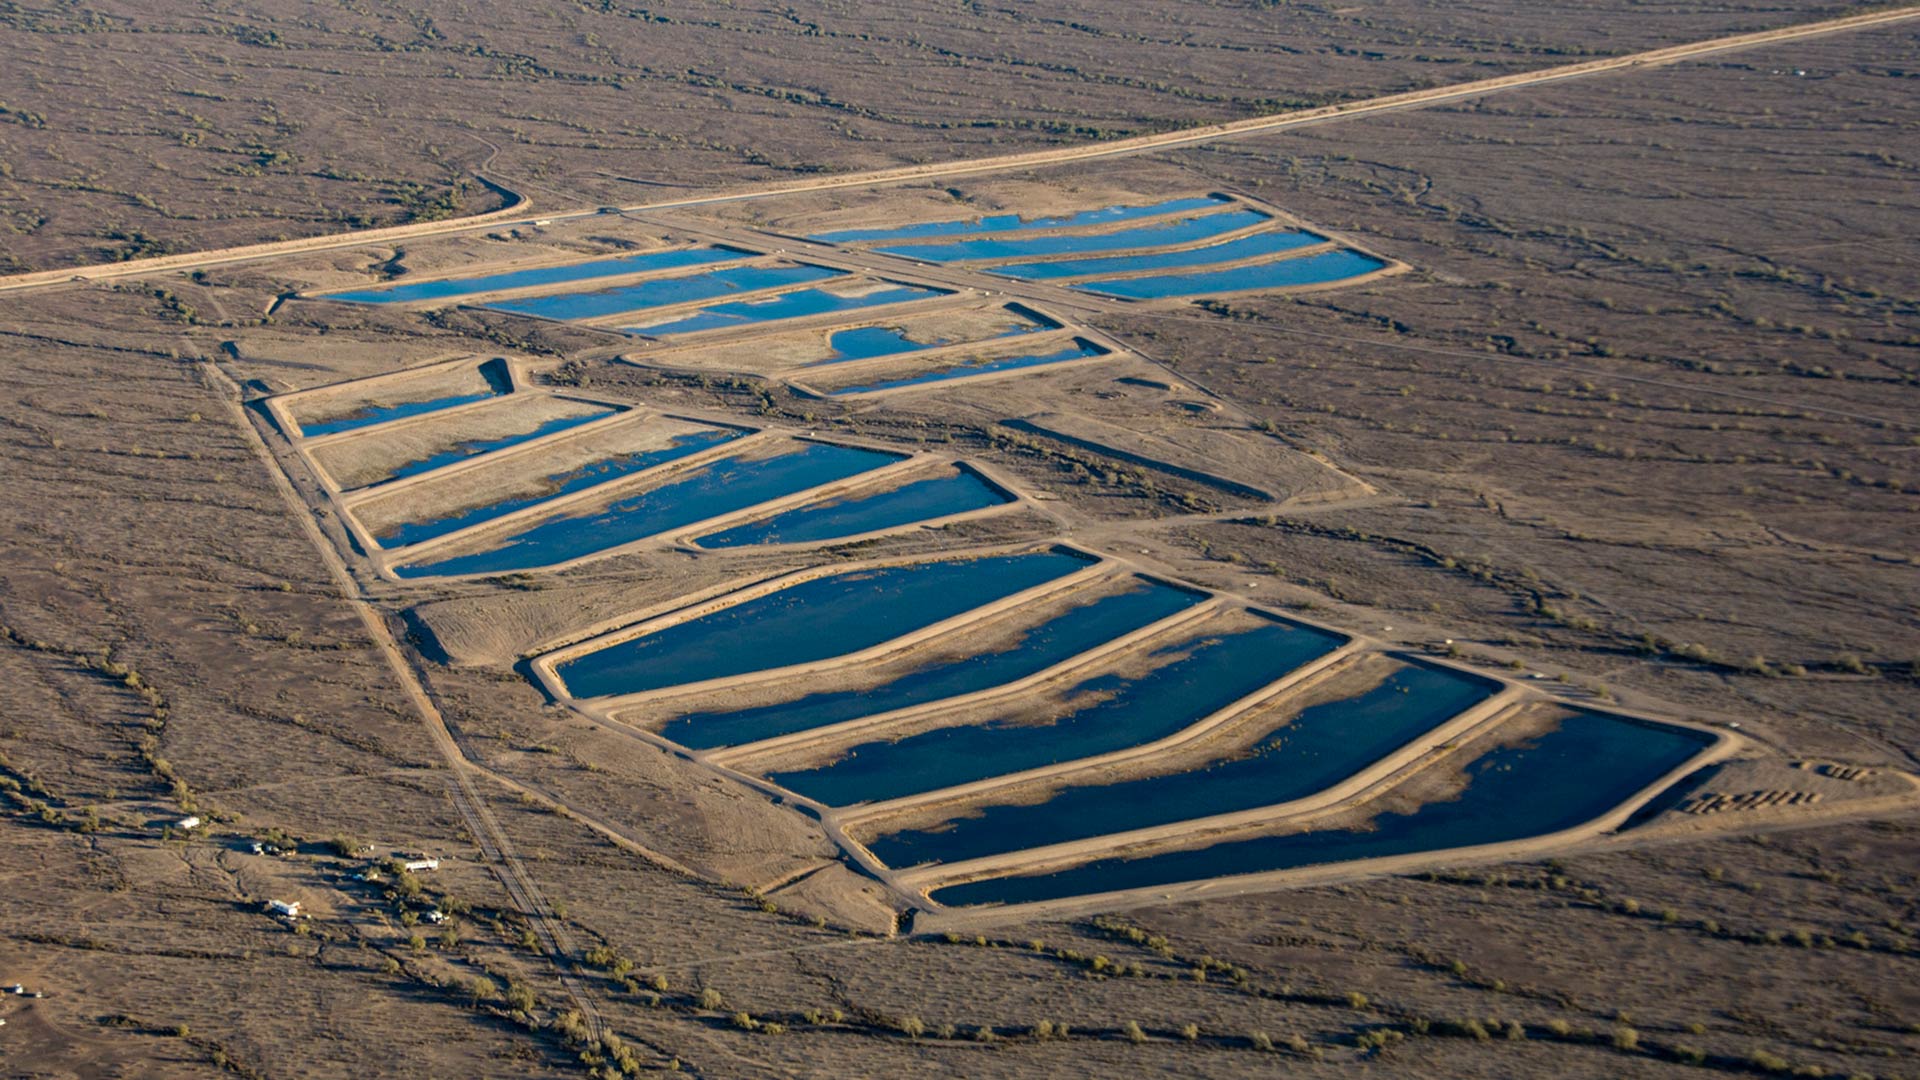 Tonopah Desert Recharge Project in Tonopah, about 65 miles west of Phoenix.